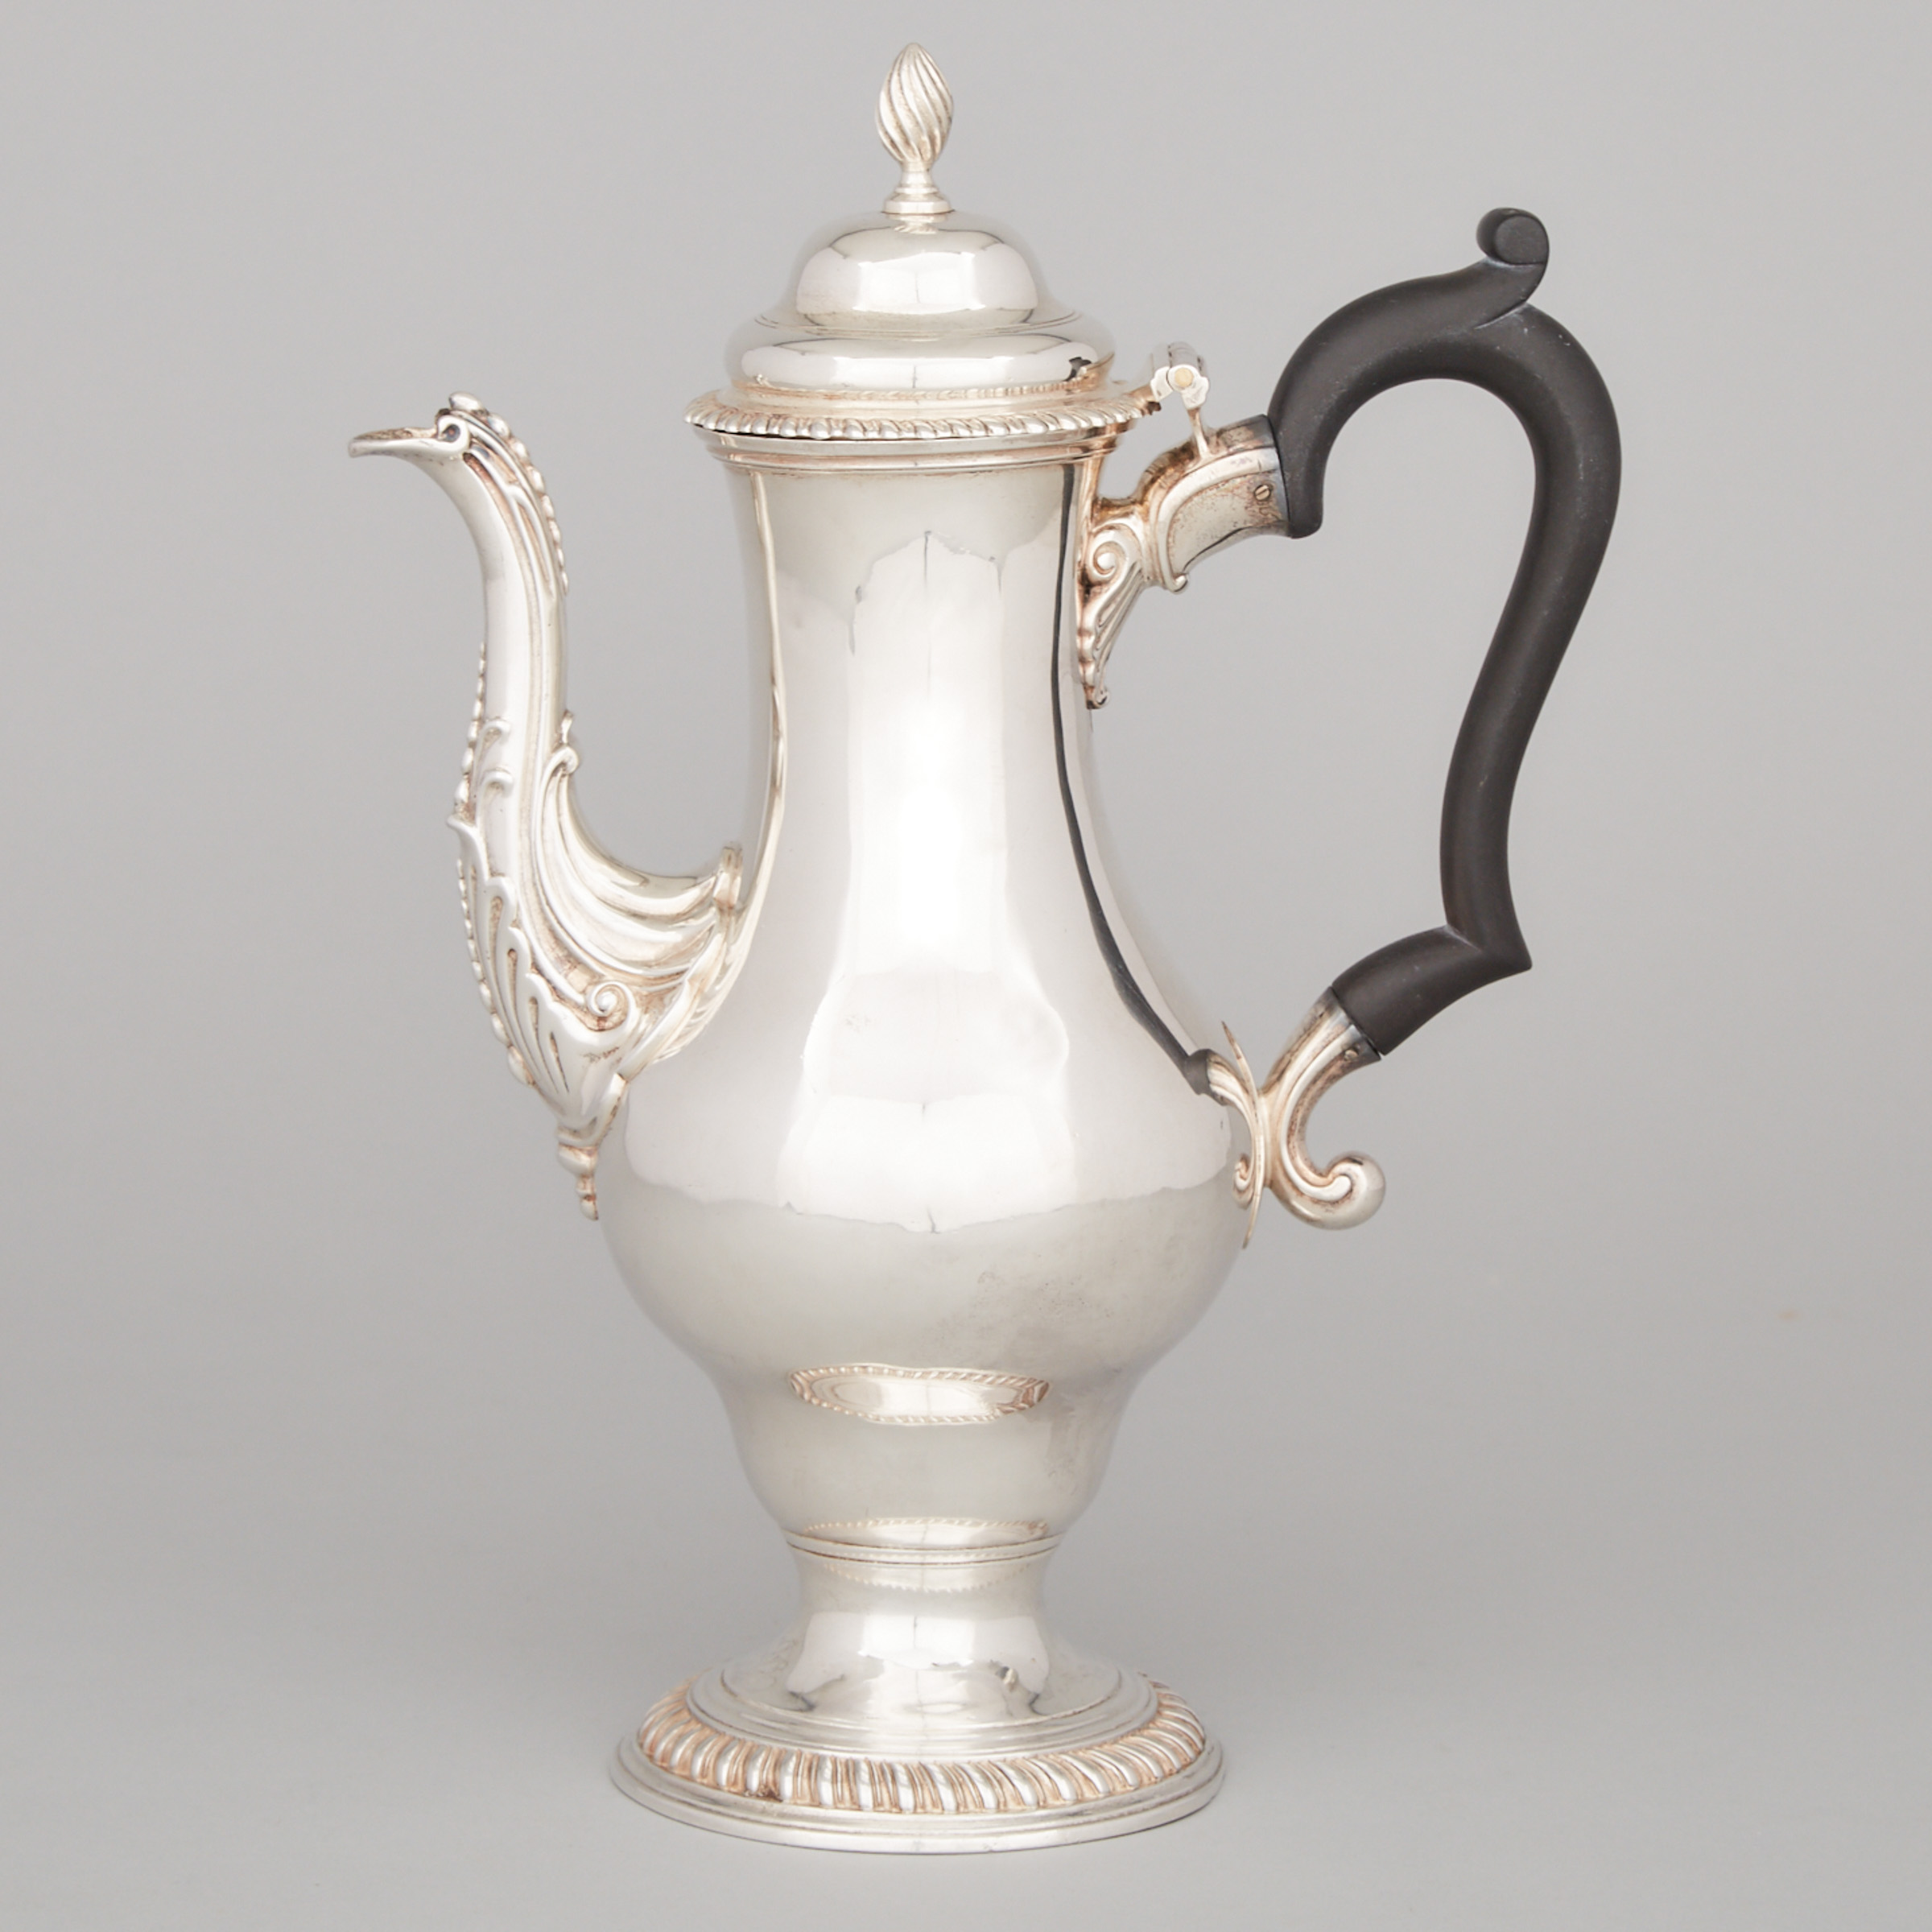 George III Silver Coffee Pot, William Grundy, London, 1772